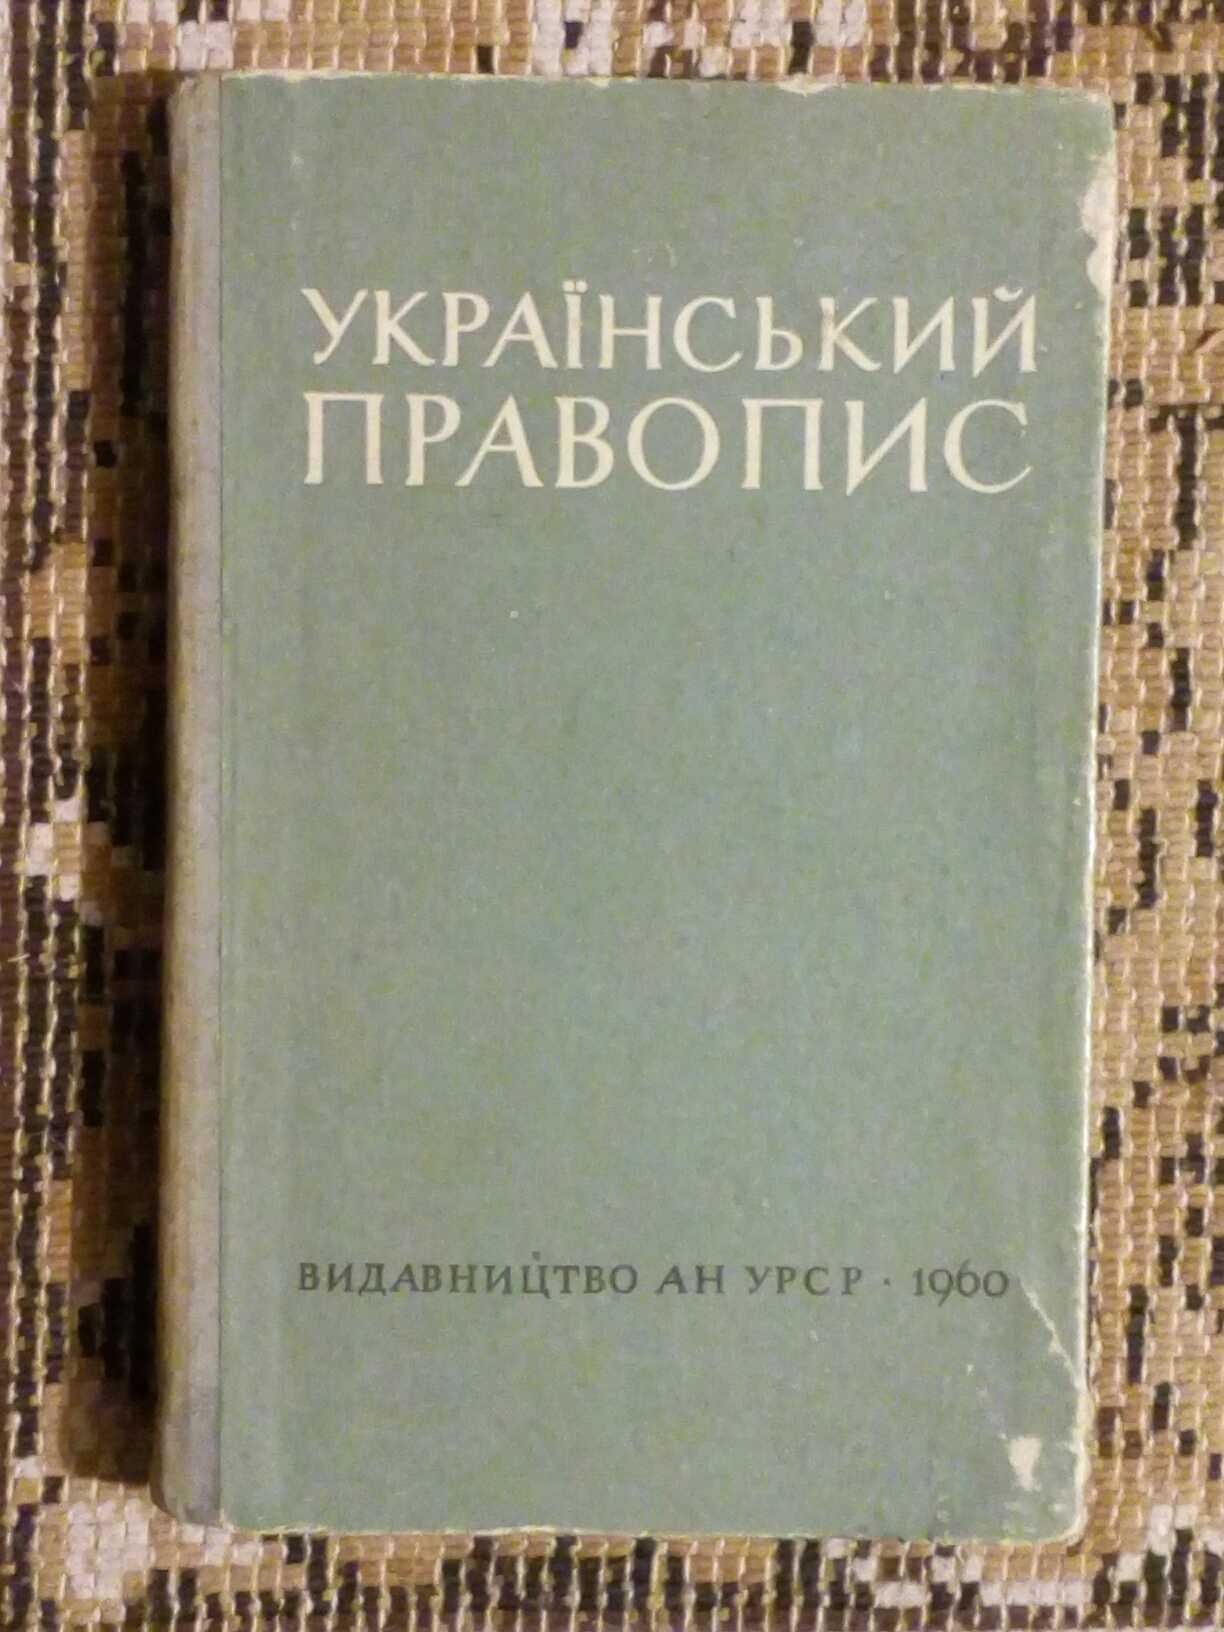 Український правопис 1960рік.